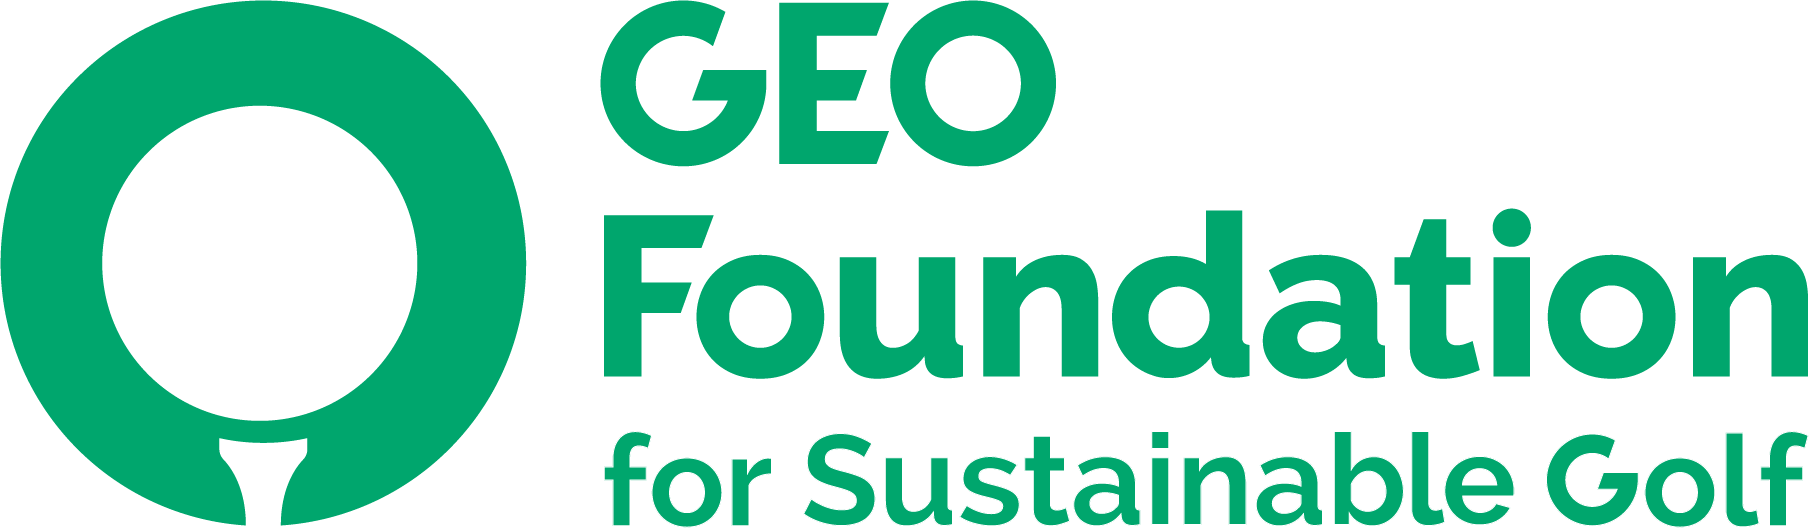 GEO Foundation logo